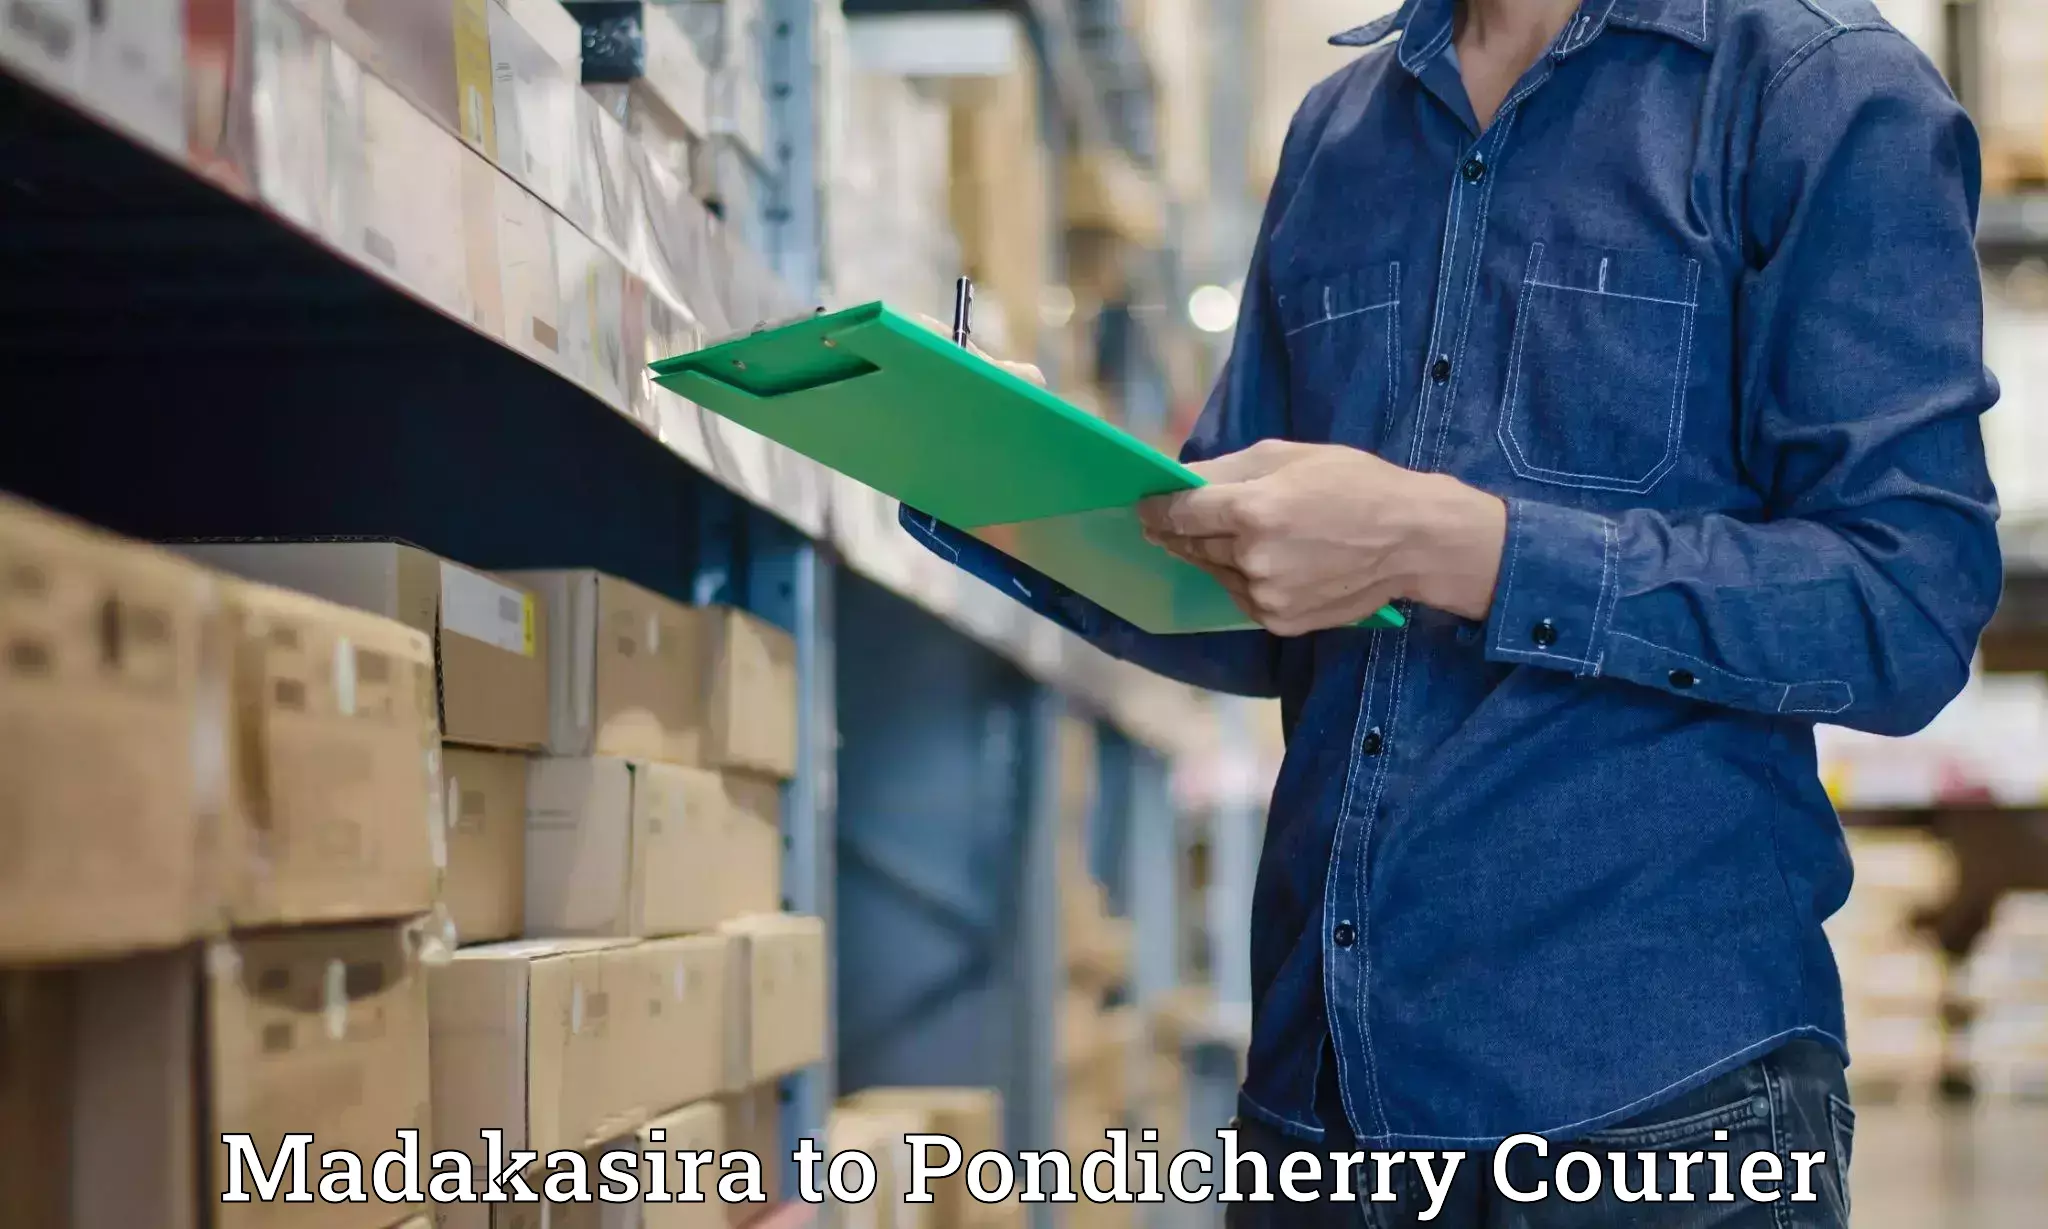 User-friendly courier app Madakasira to Pondicherry